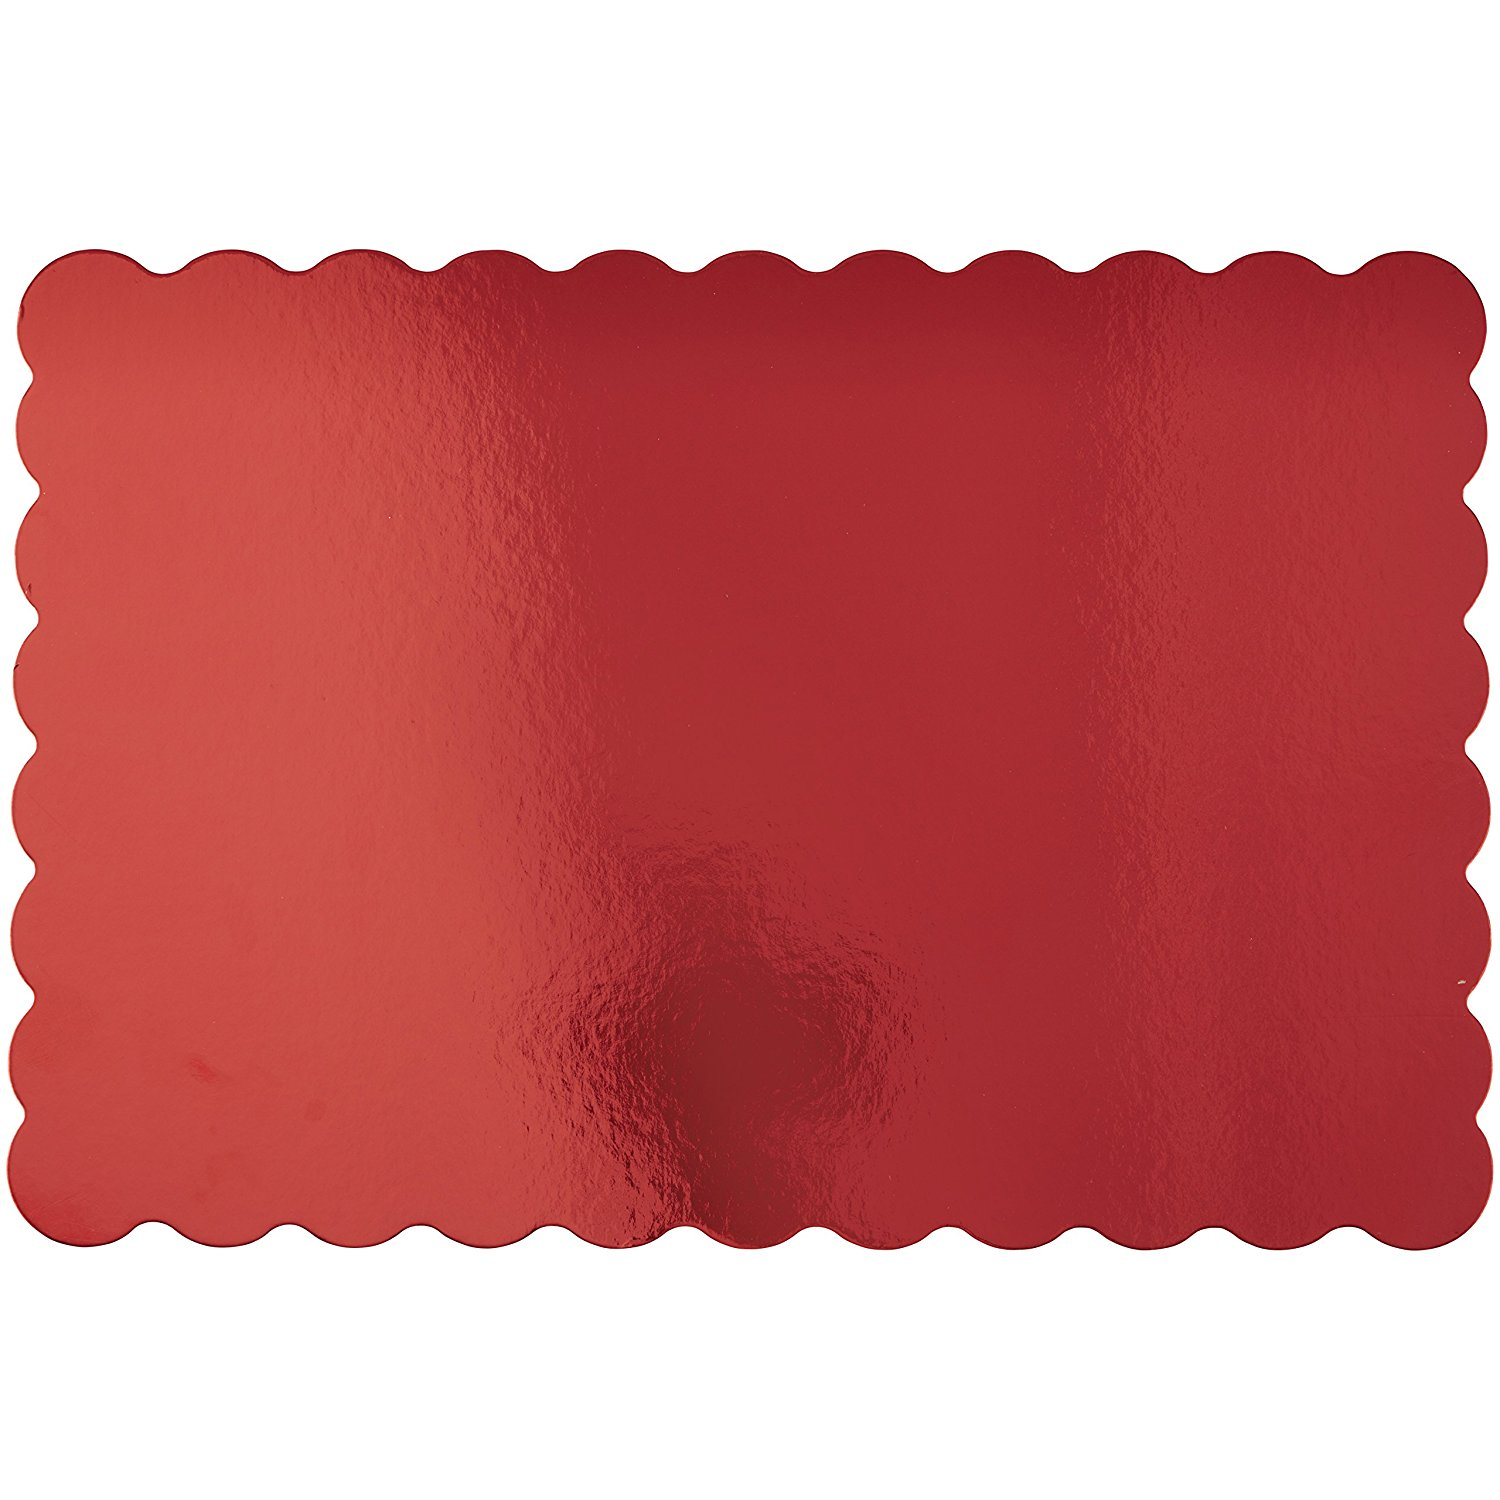 Scalloped Cardboard - Red - 1/2 Sheet